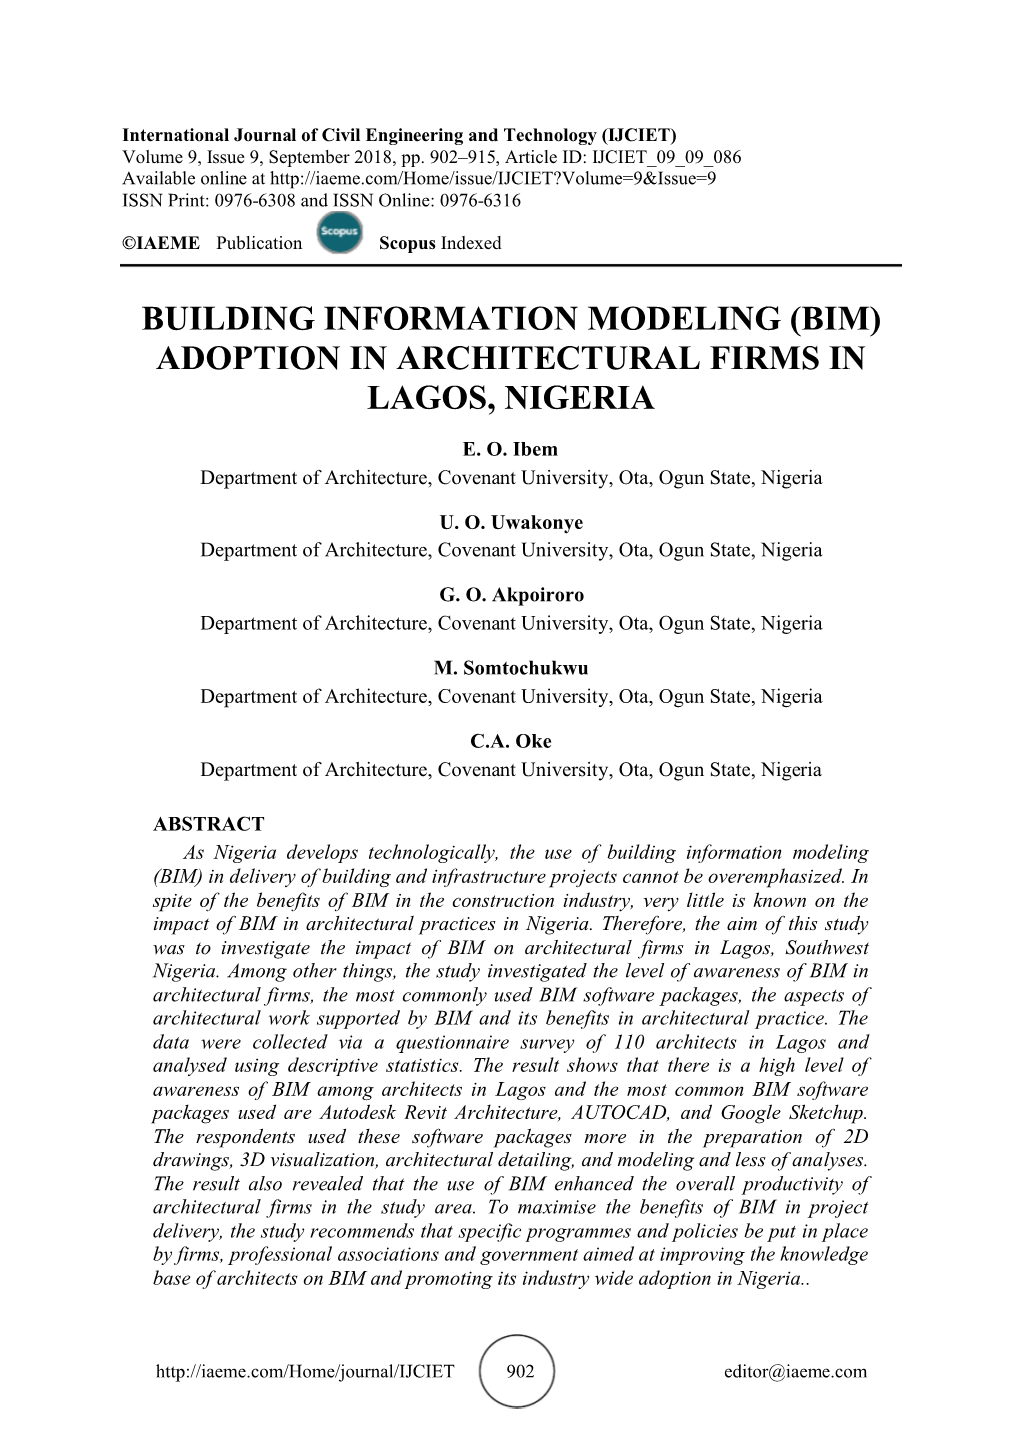 Building Information Modeling (Bim) Adoption in Architectural Firms in Lagos, Nigeria